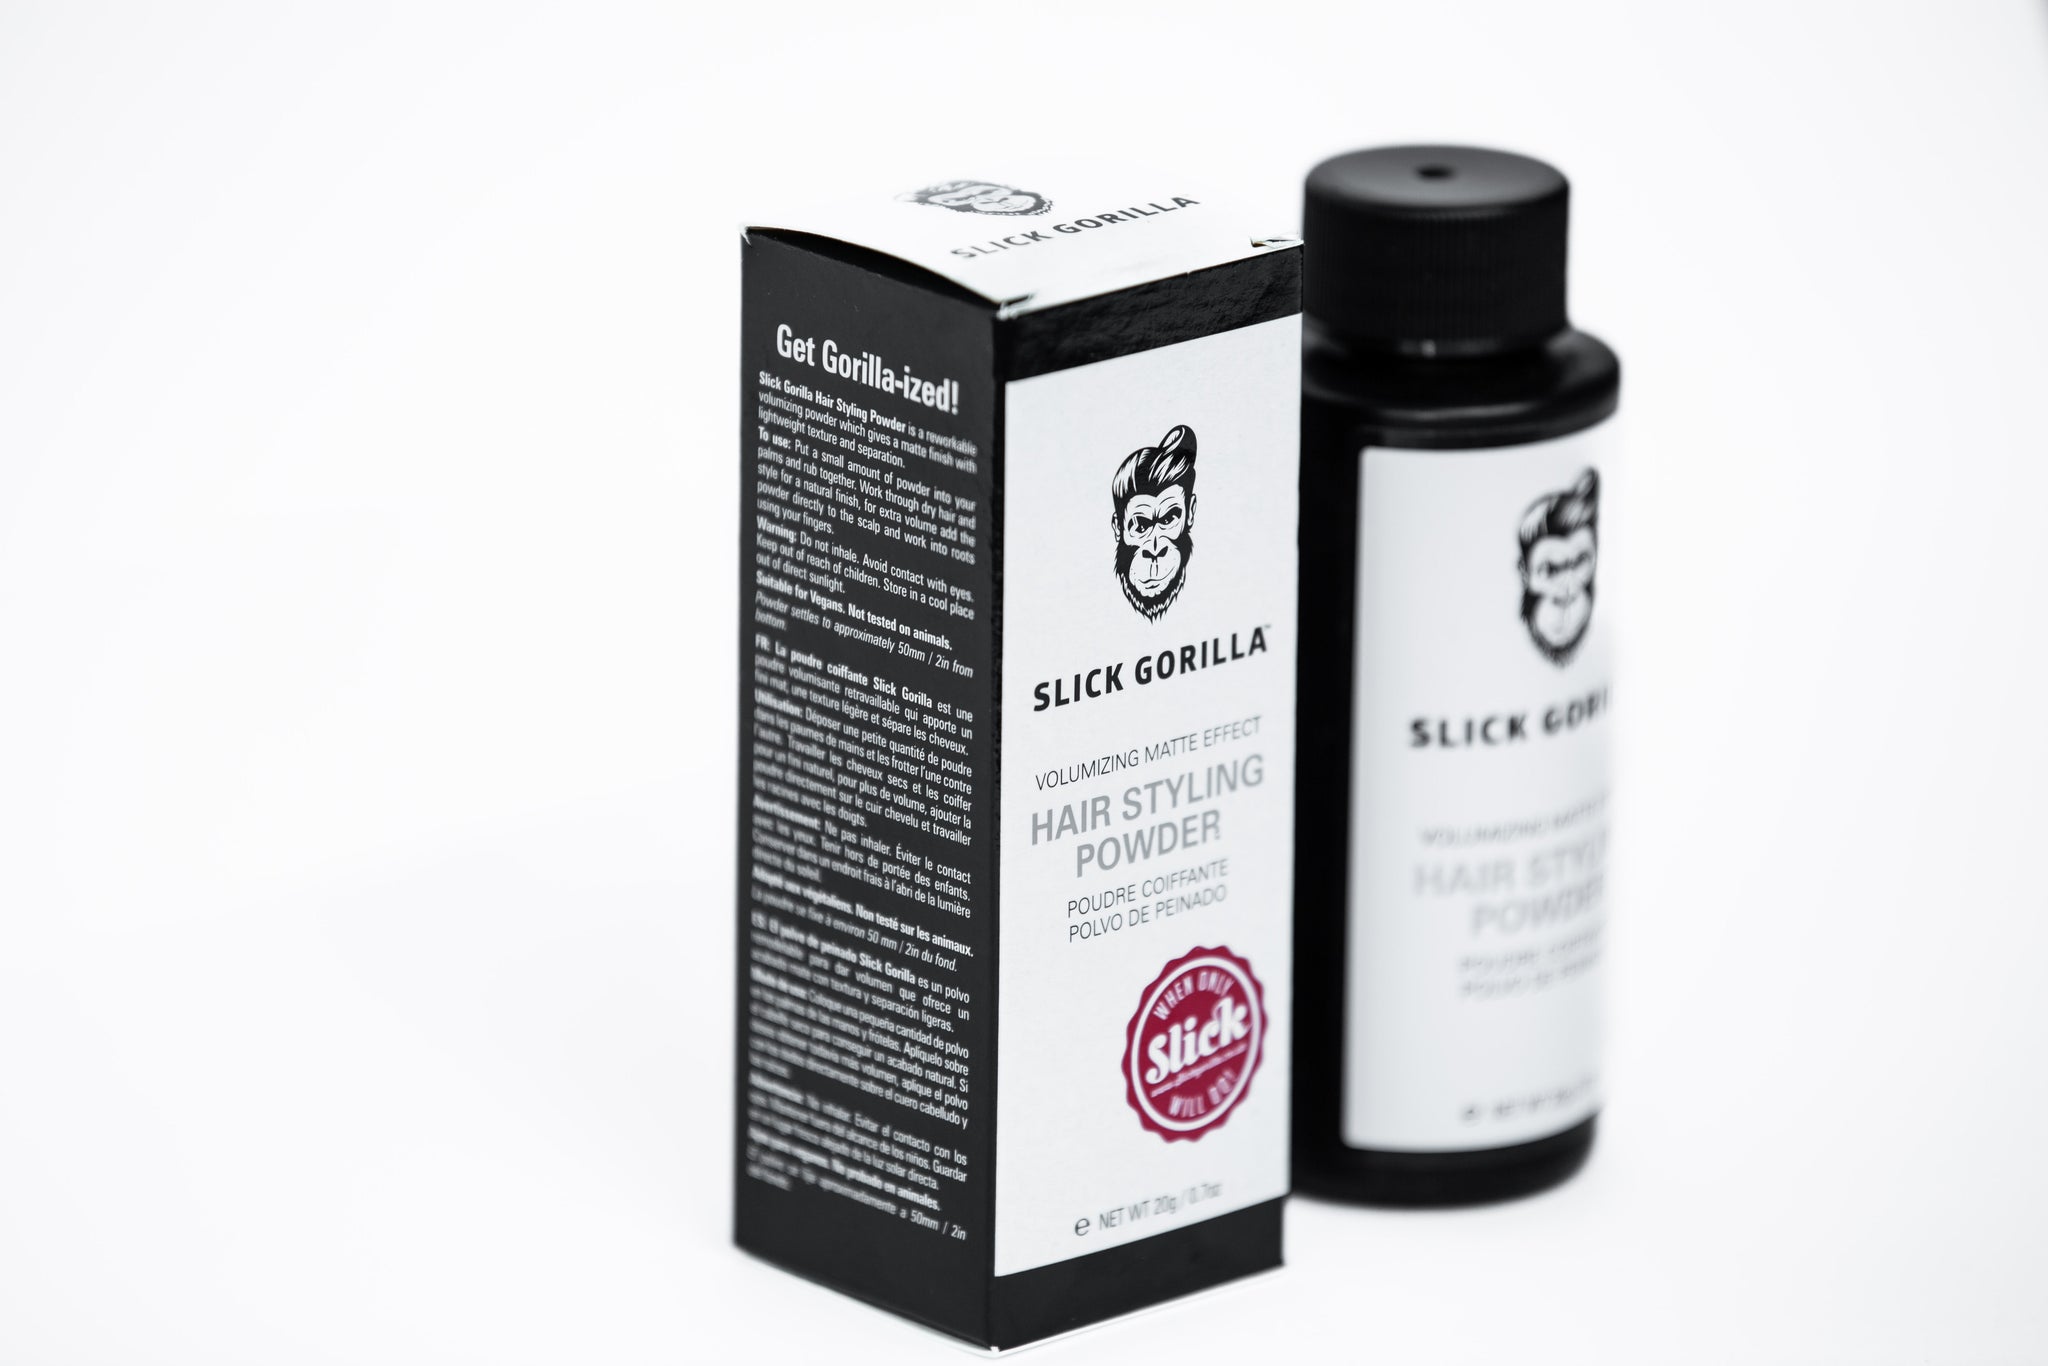 Slick Gorilla Hair Styling Powder – Barber & Co